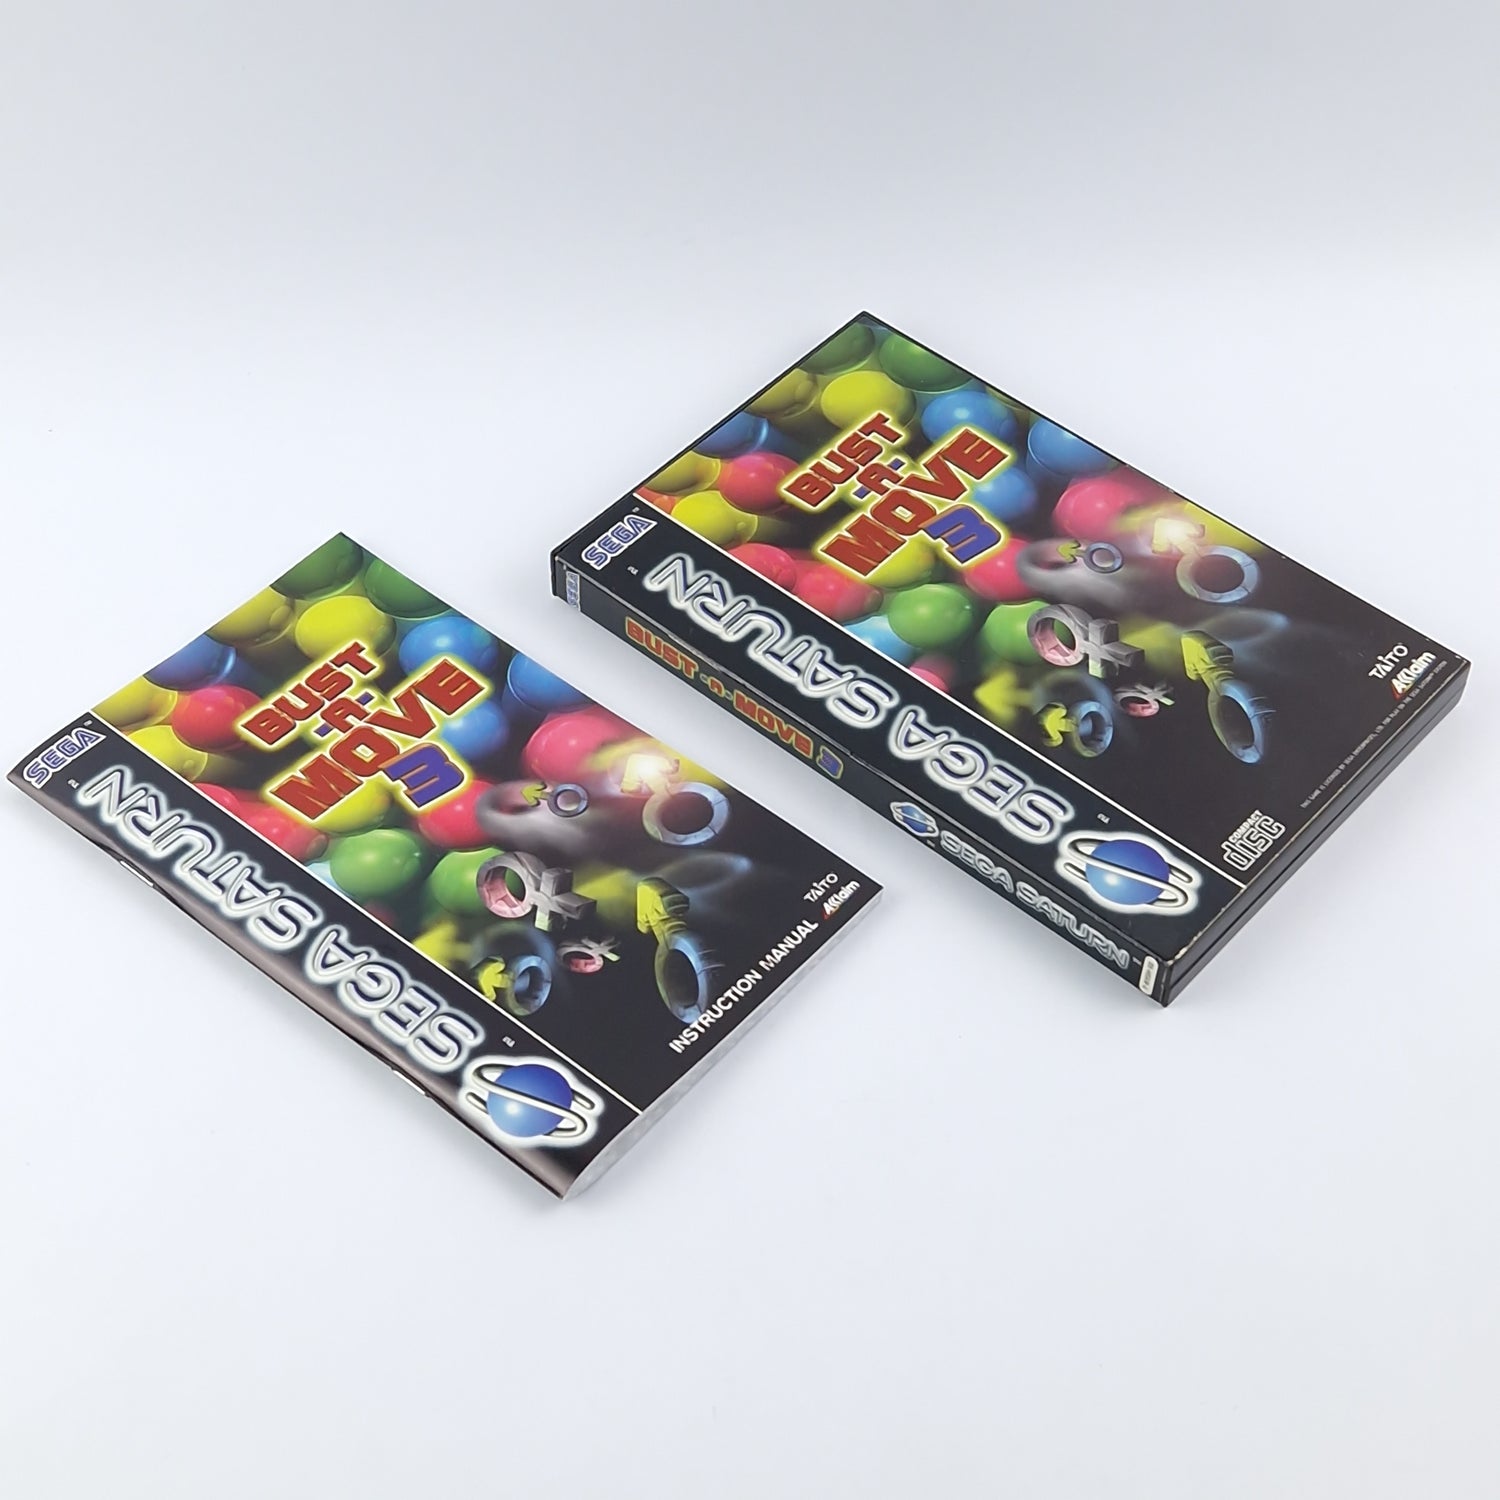 Sega Saturn Spiel : Bust-A-Move 3 - OVP Anleitung CD PAL Disc Game